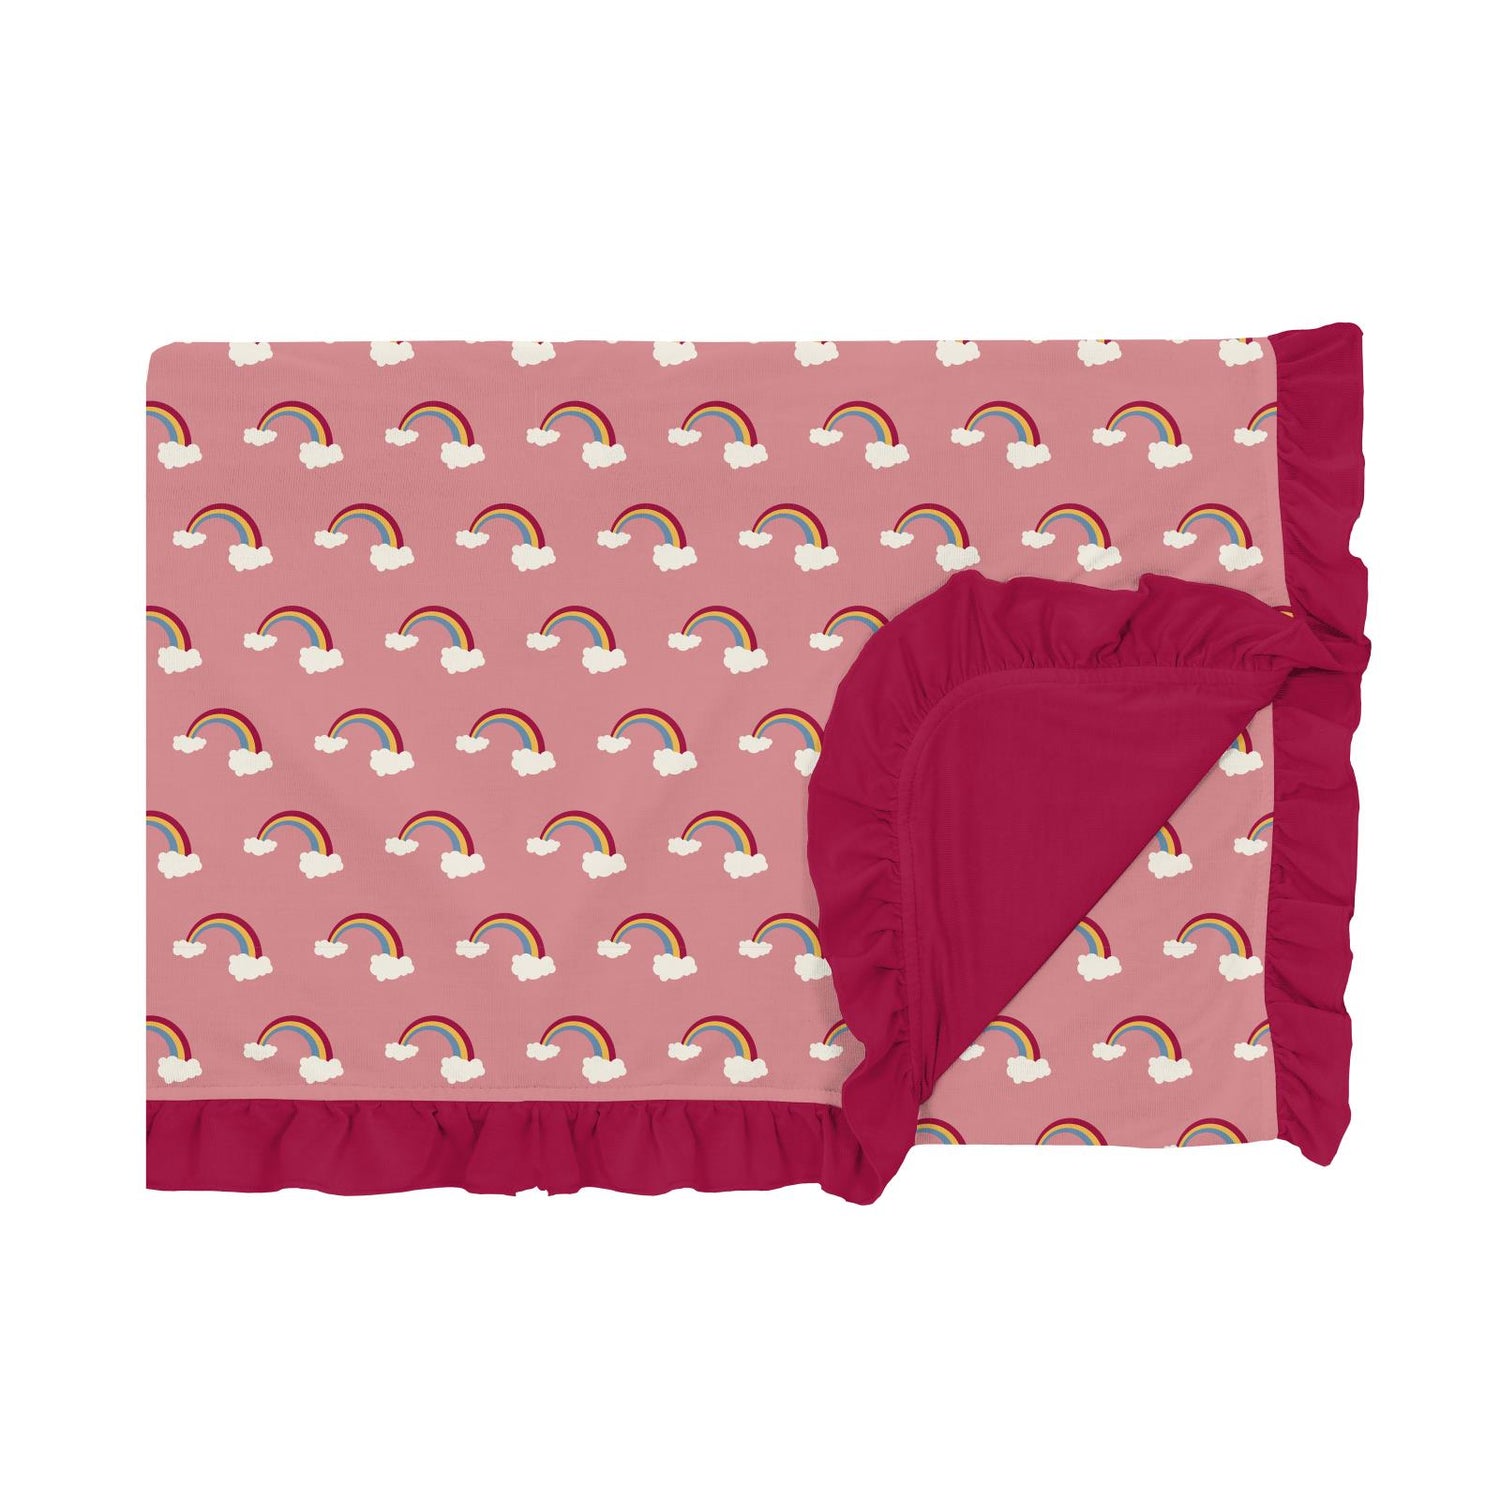 Print Ruffle Toddler Blanket in Strawberry Rainbows